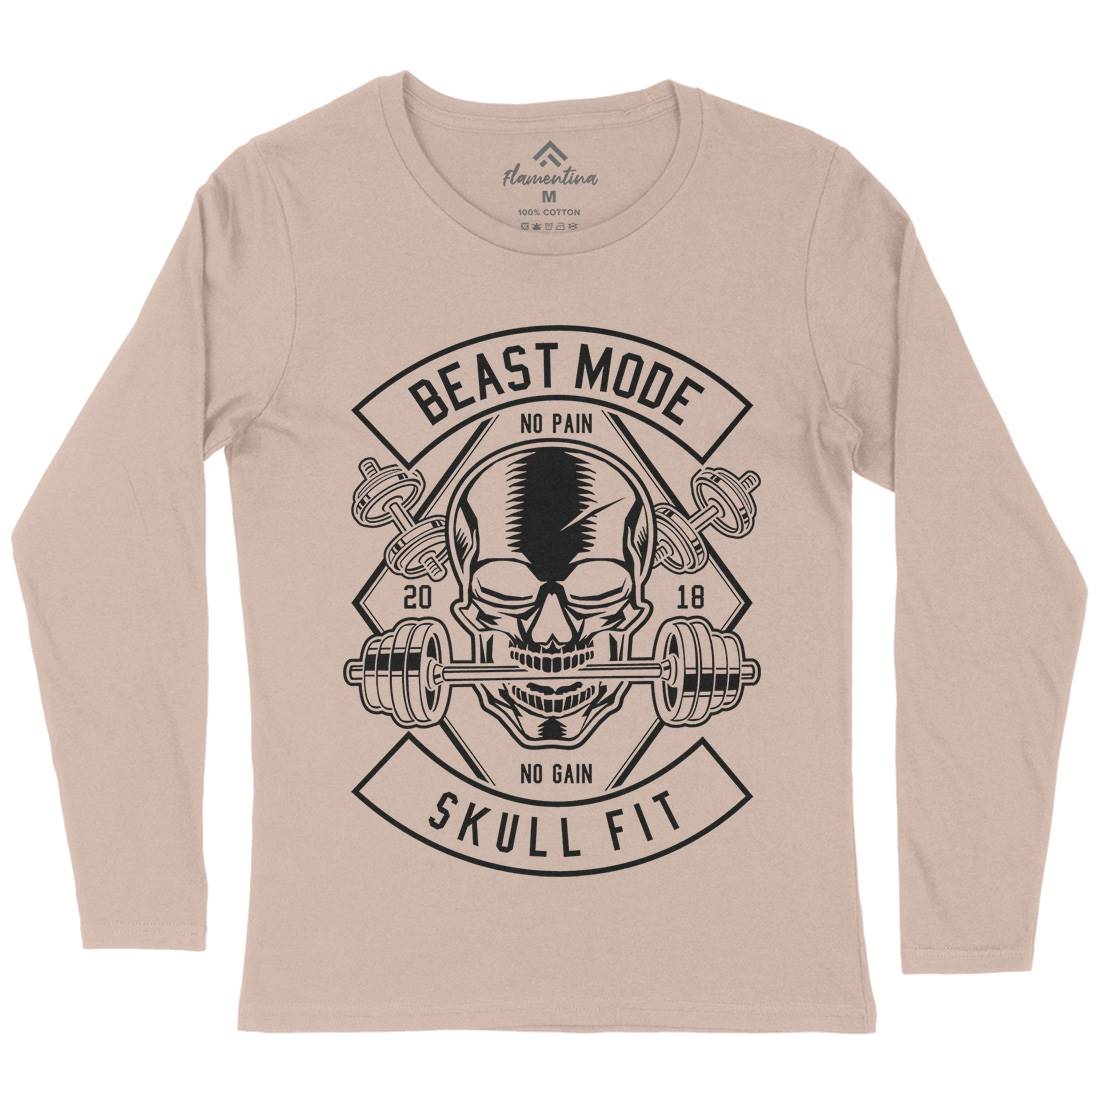 Skull Fit Womens Long Sleeve T-Shirt Gym B628